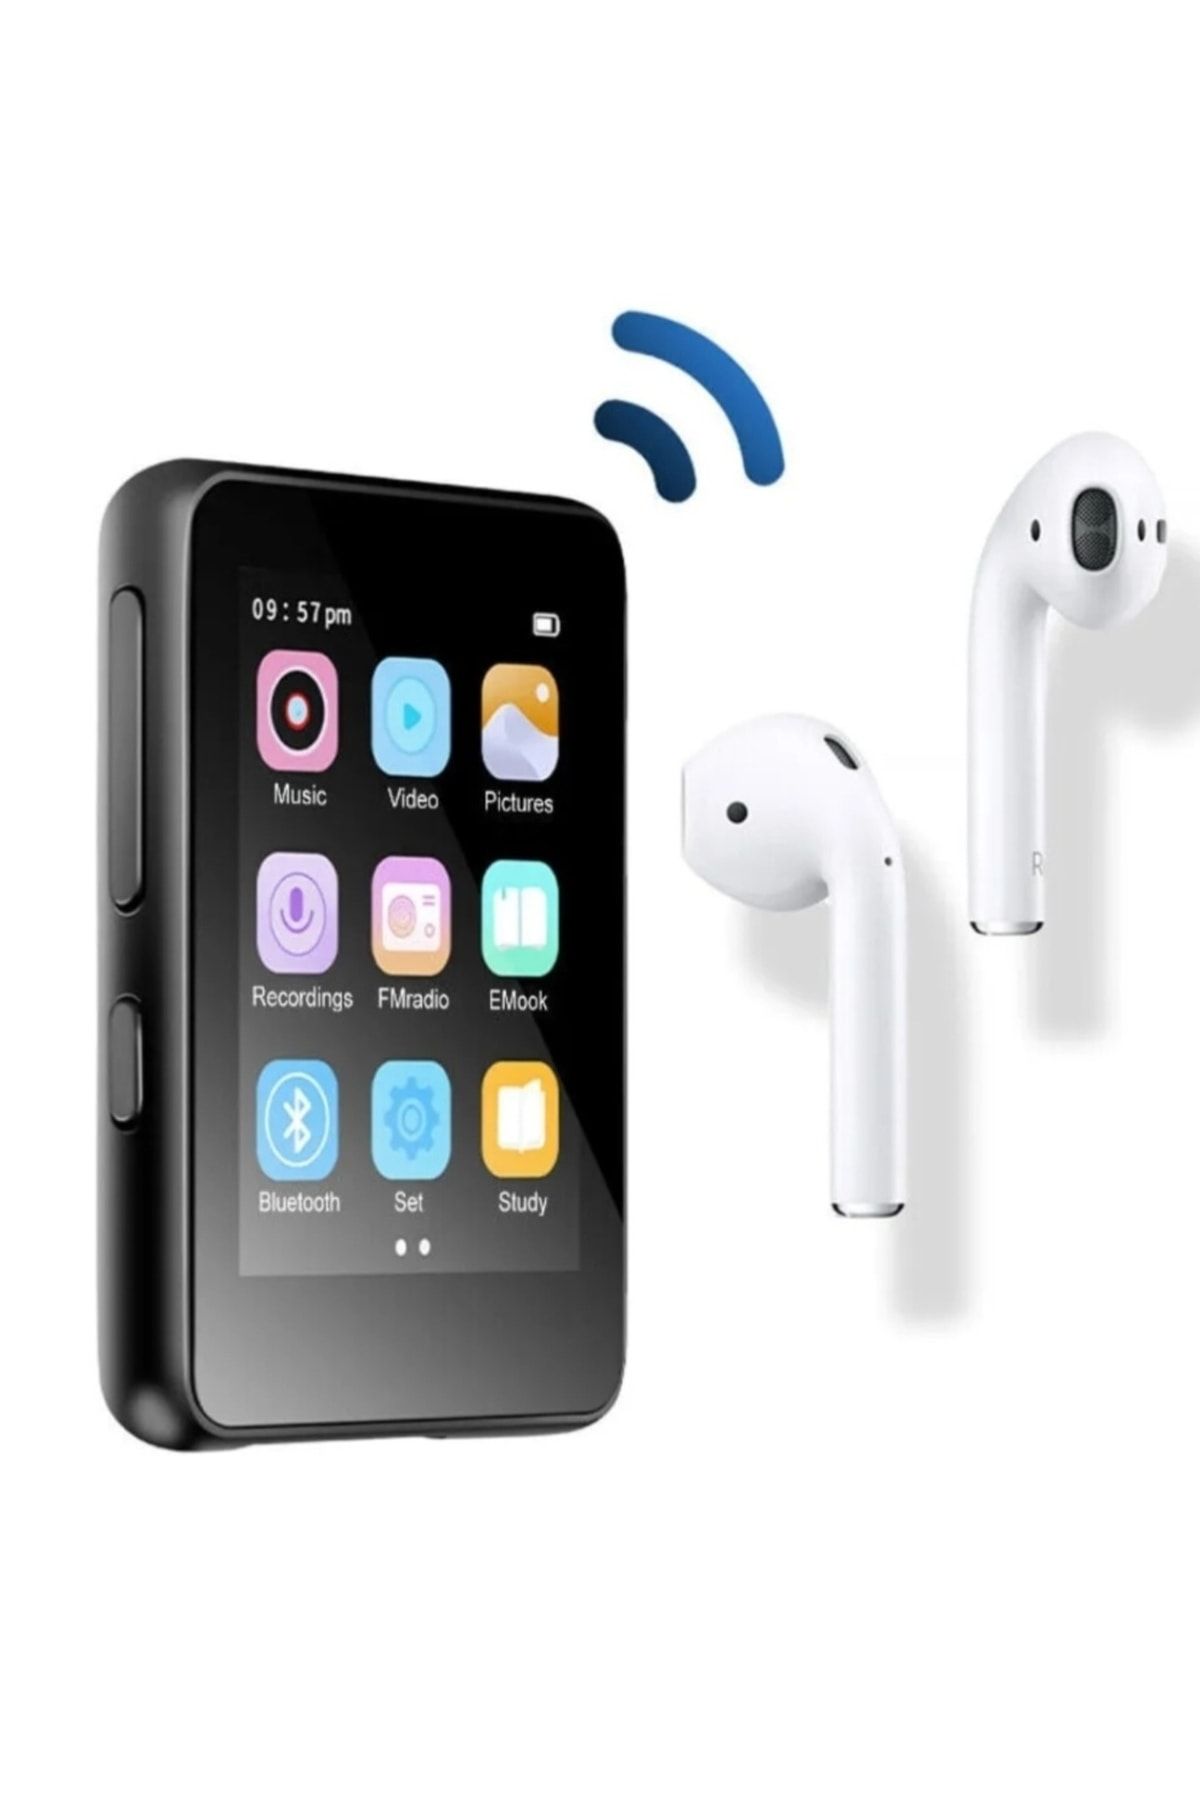 JUNGLEE Dokunmatik Ekranlı Bluetooth Lu Mp3 Mp4 Player Ses Kayıt Dahili Hoparlör Müzik Çalar 4gb Hafızalı